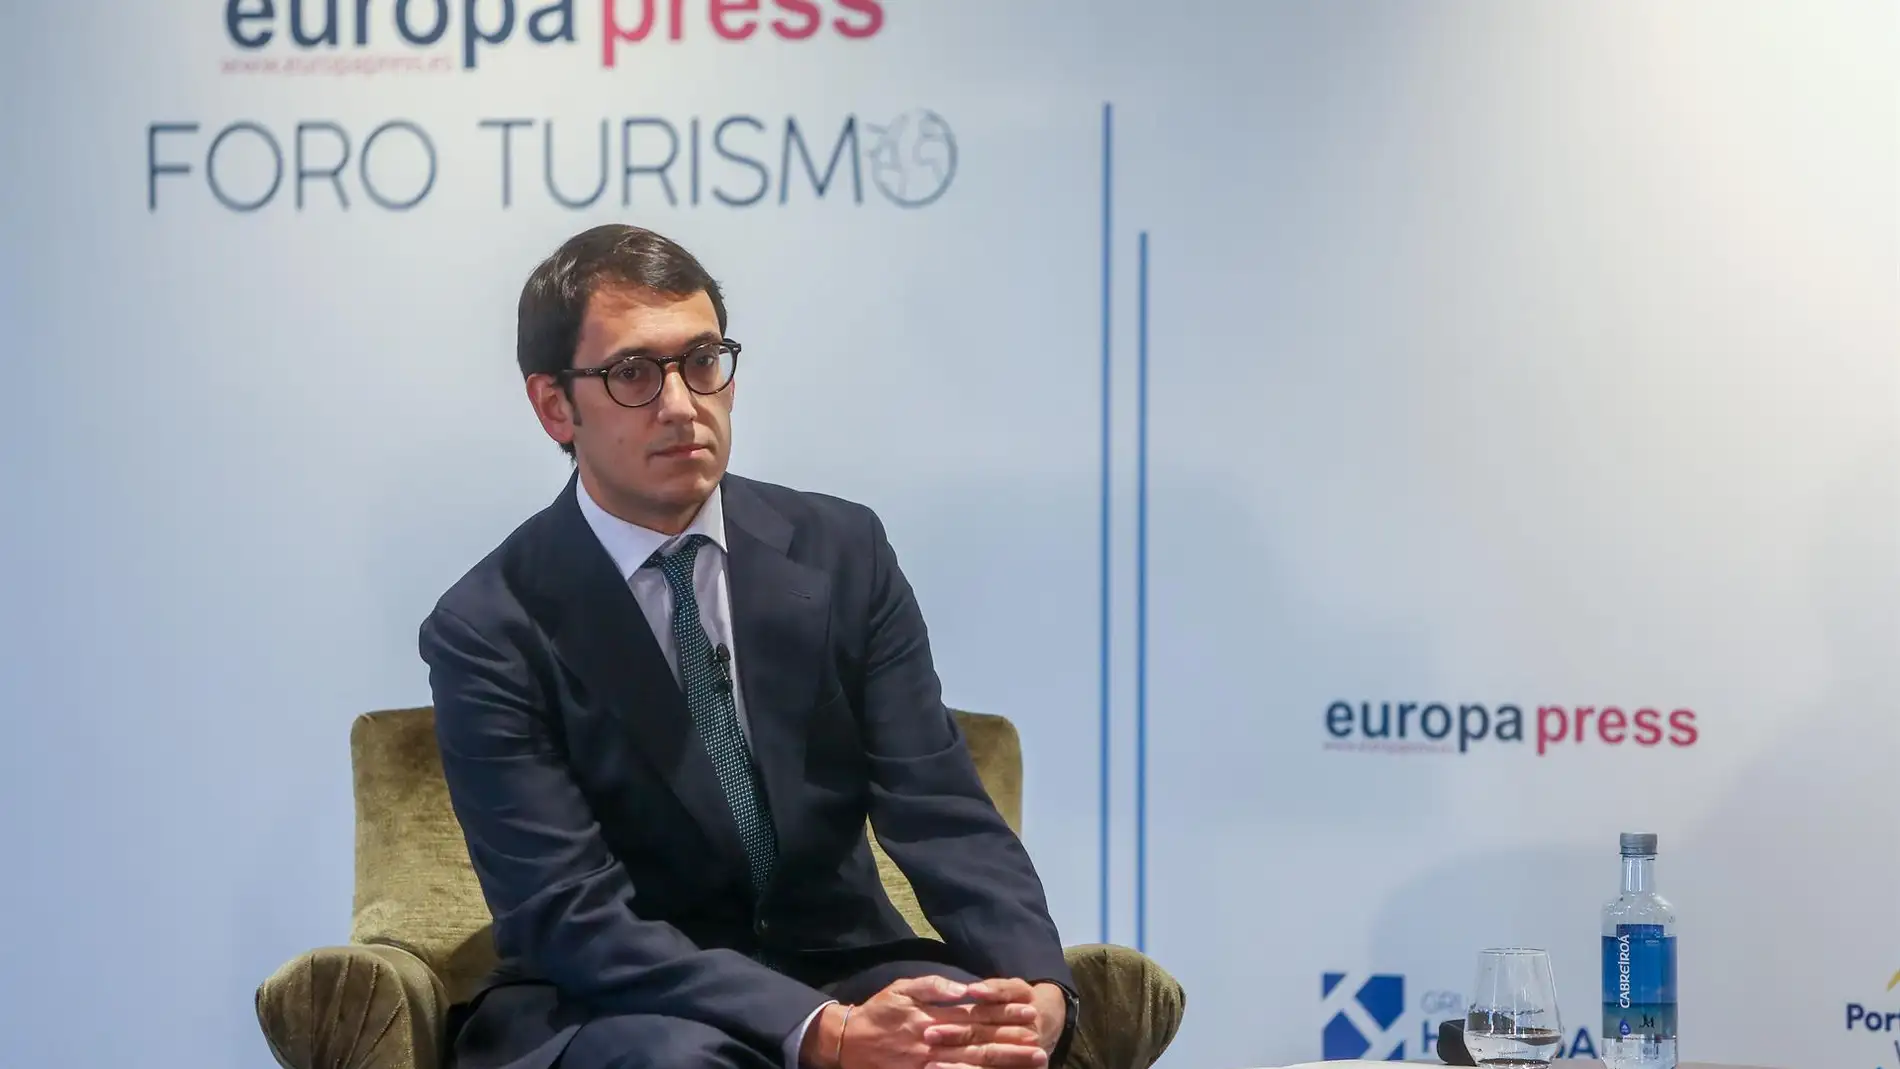 Iago Negueruela, conseller de Modelo Económico, Turismo y Trabajo del Govern de les Illes Balears